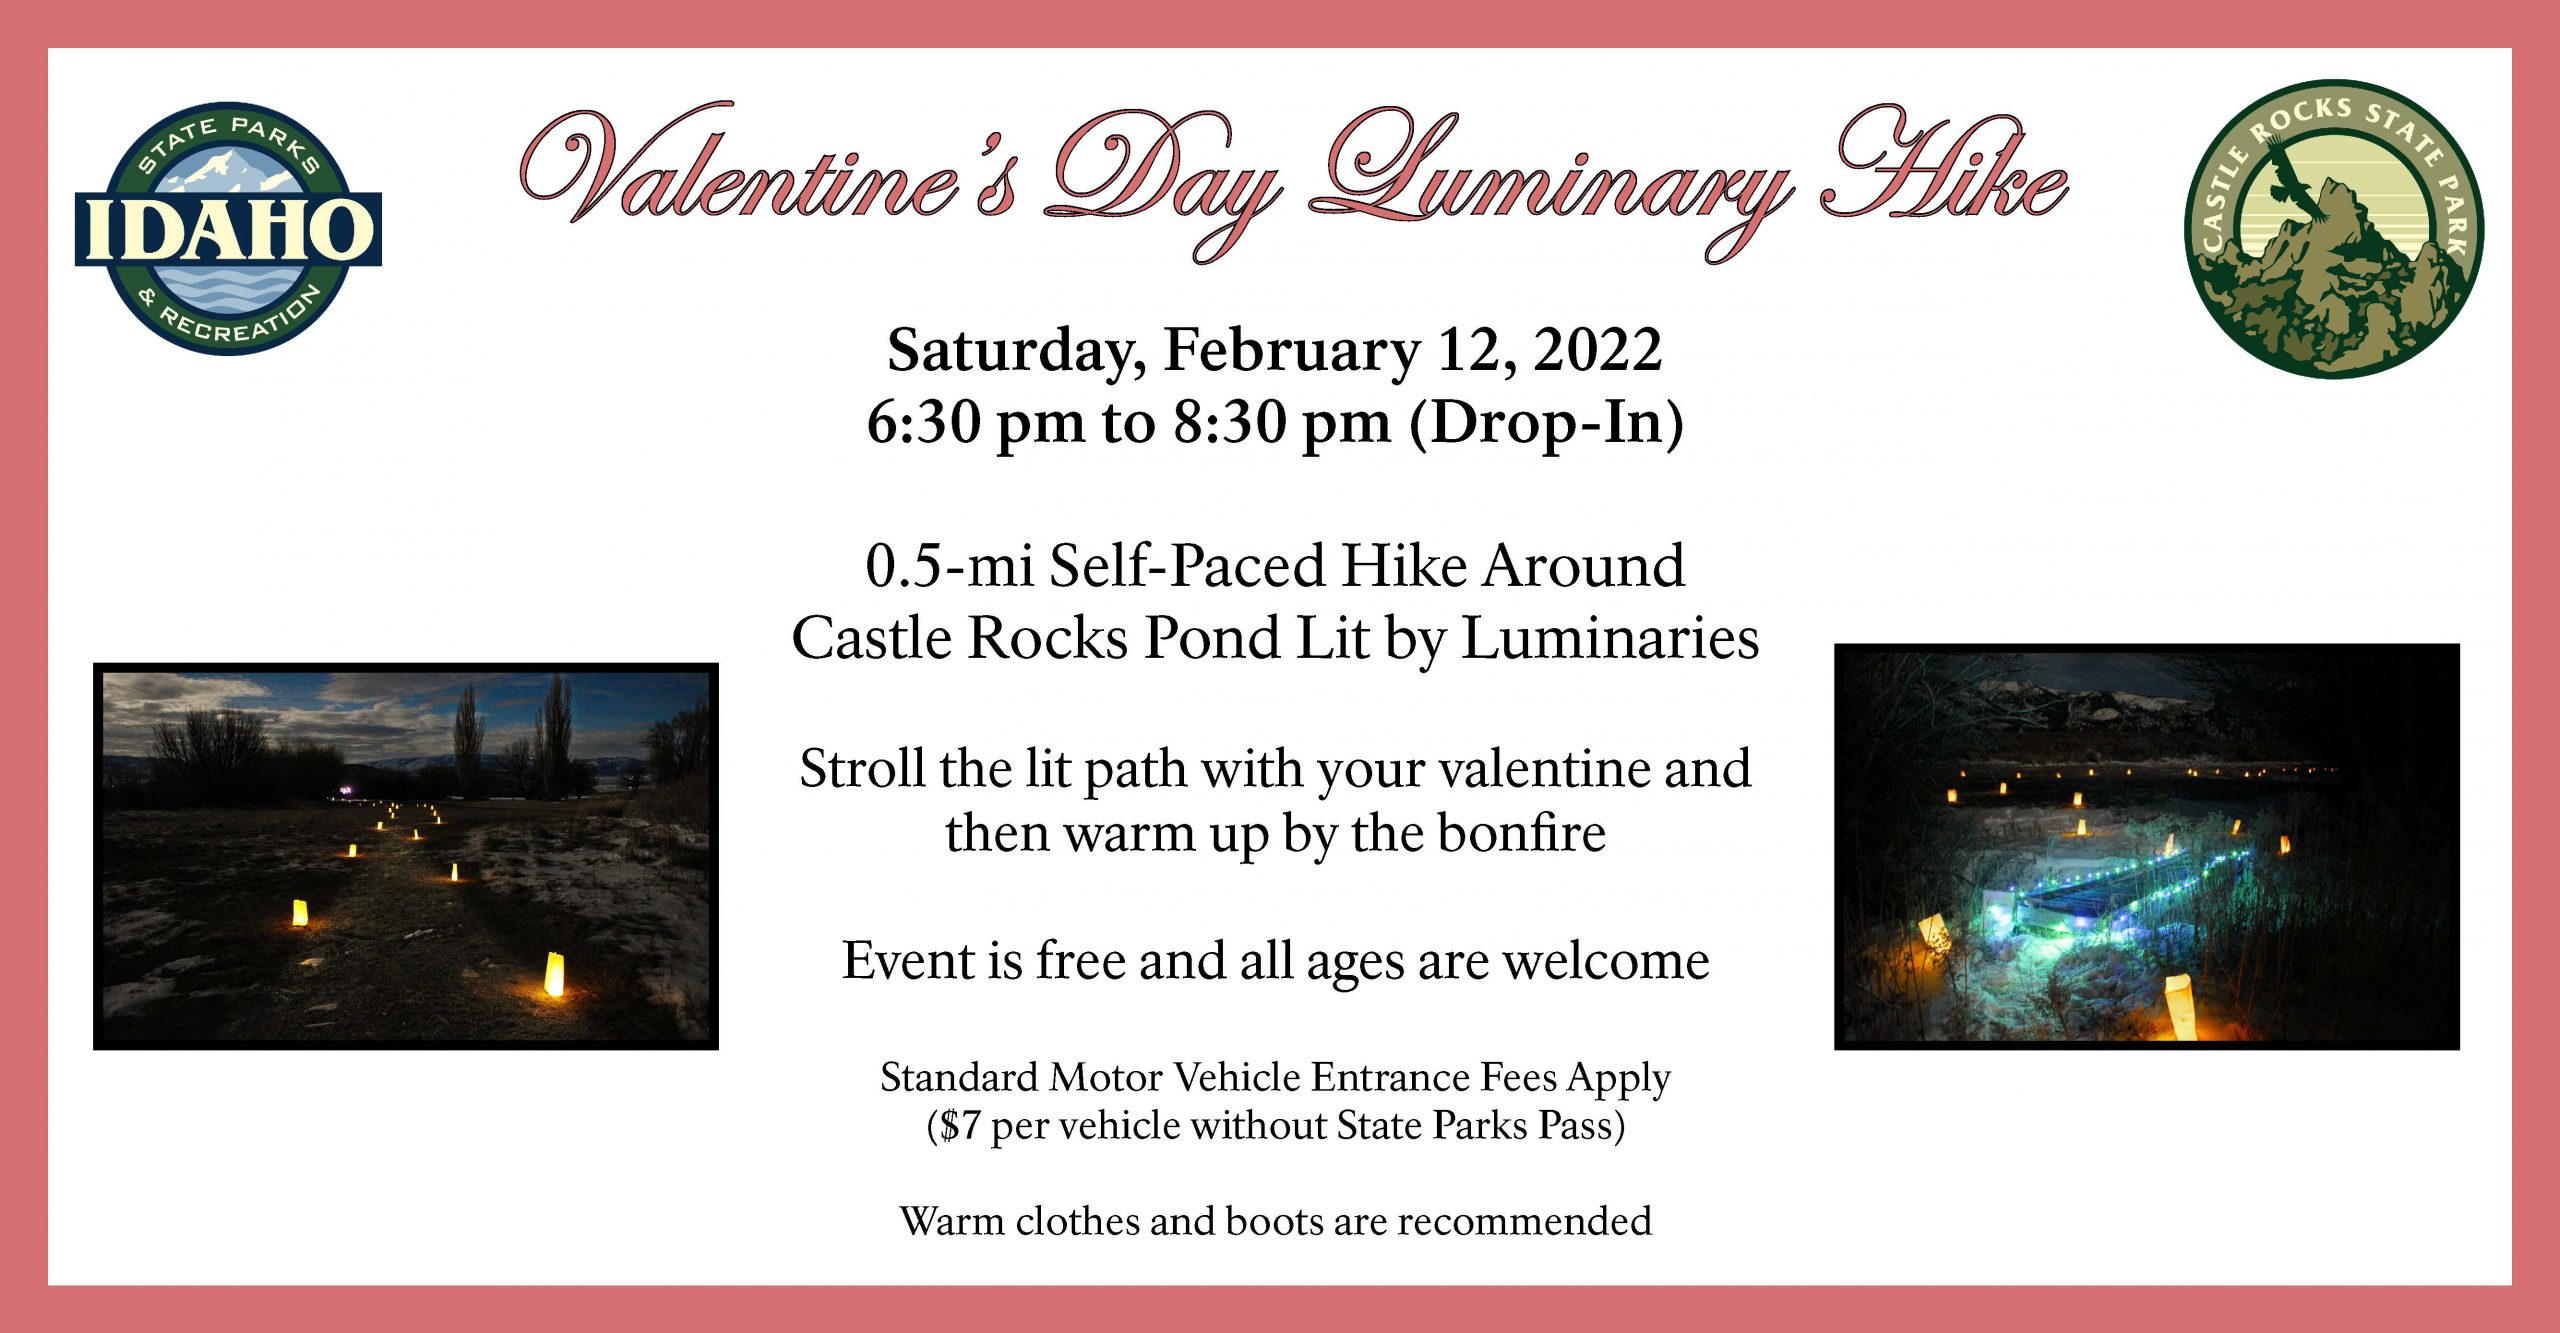 Flyer for VDay Luminary Hike: Valentine’s Day Luminary Hike